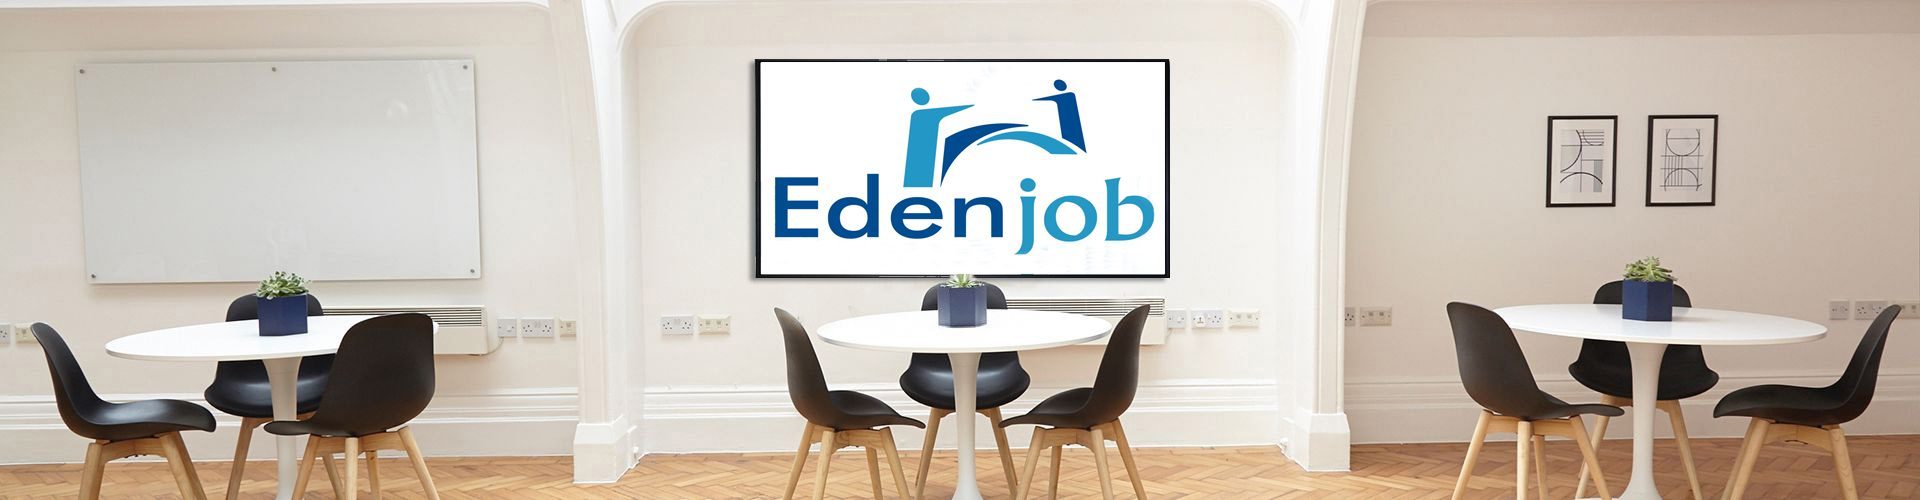 Eden Job 